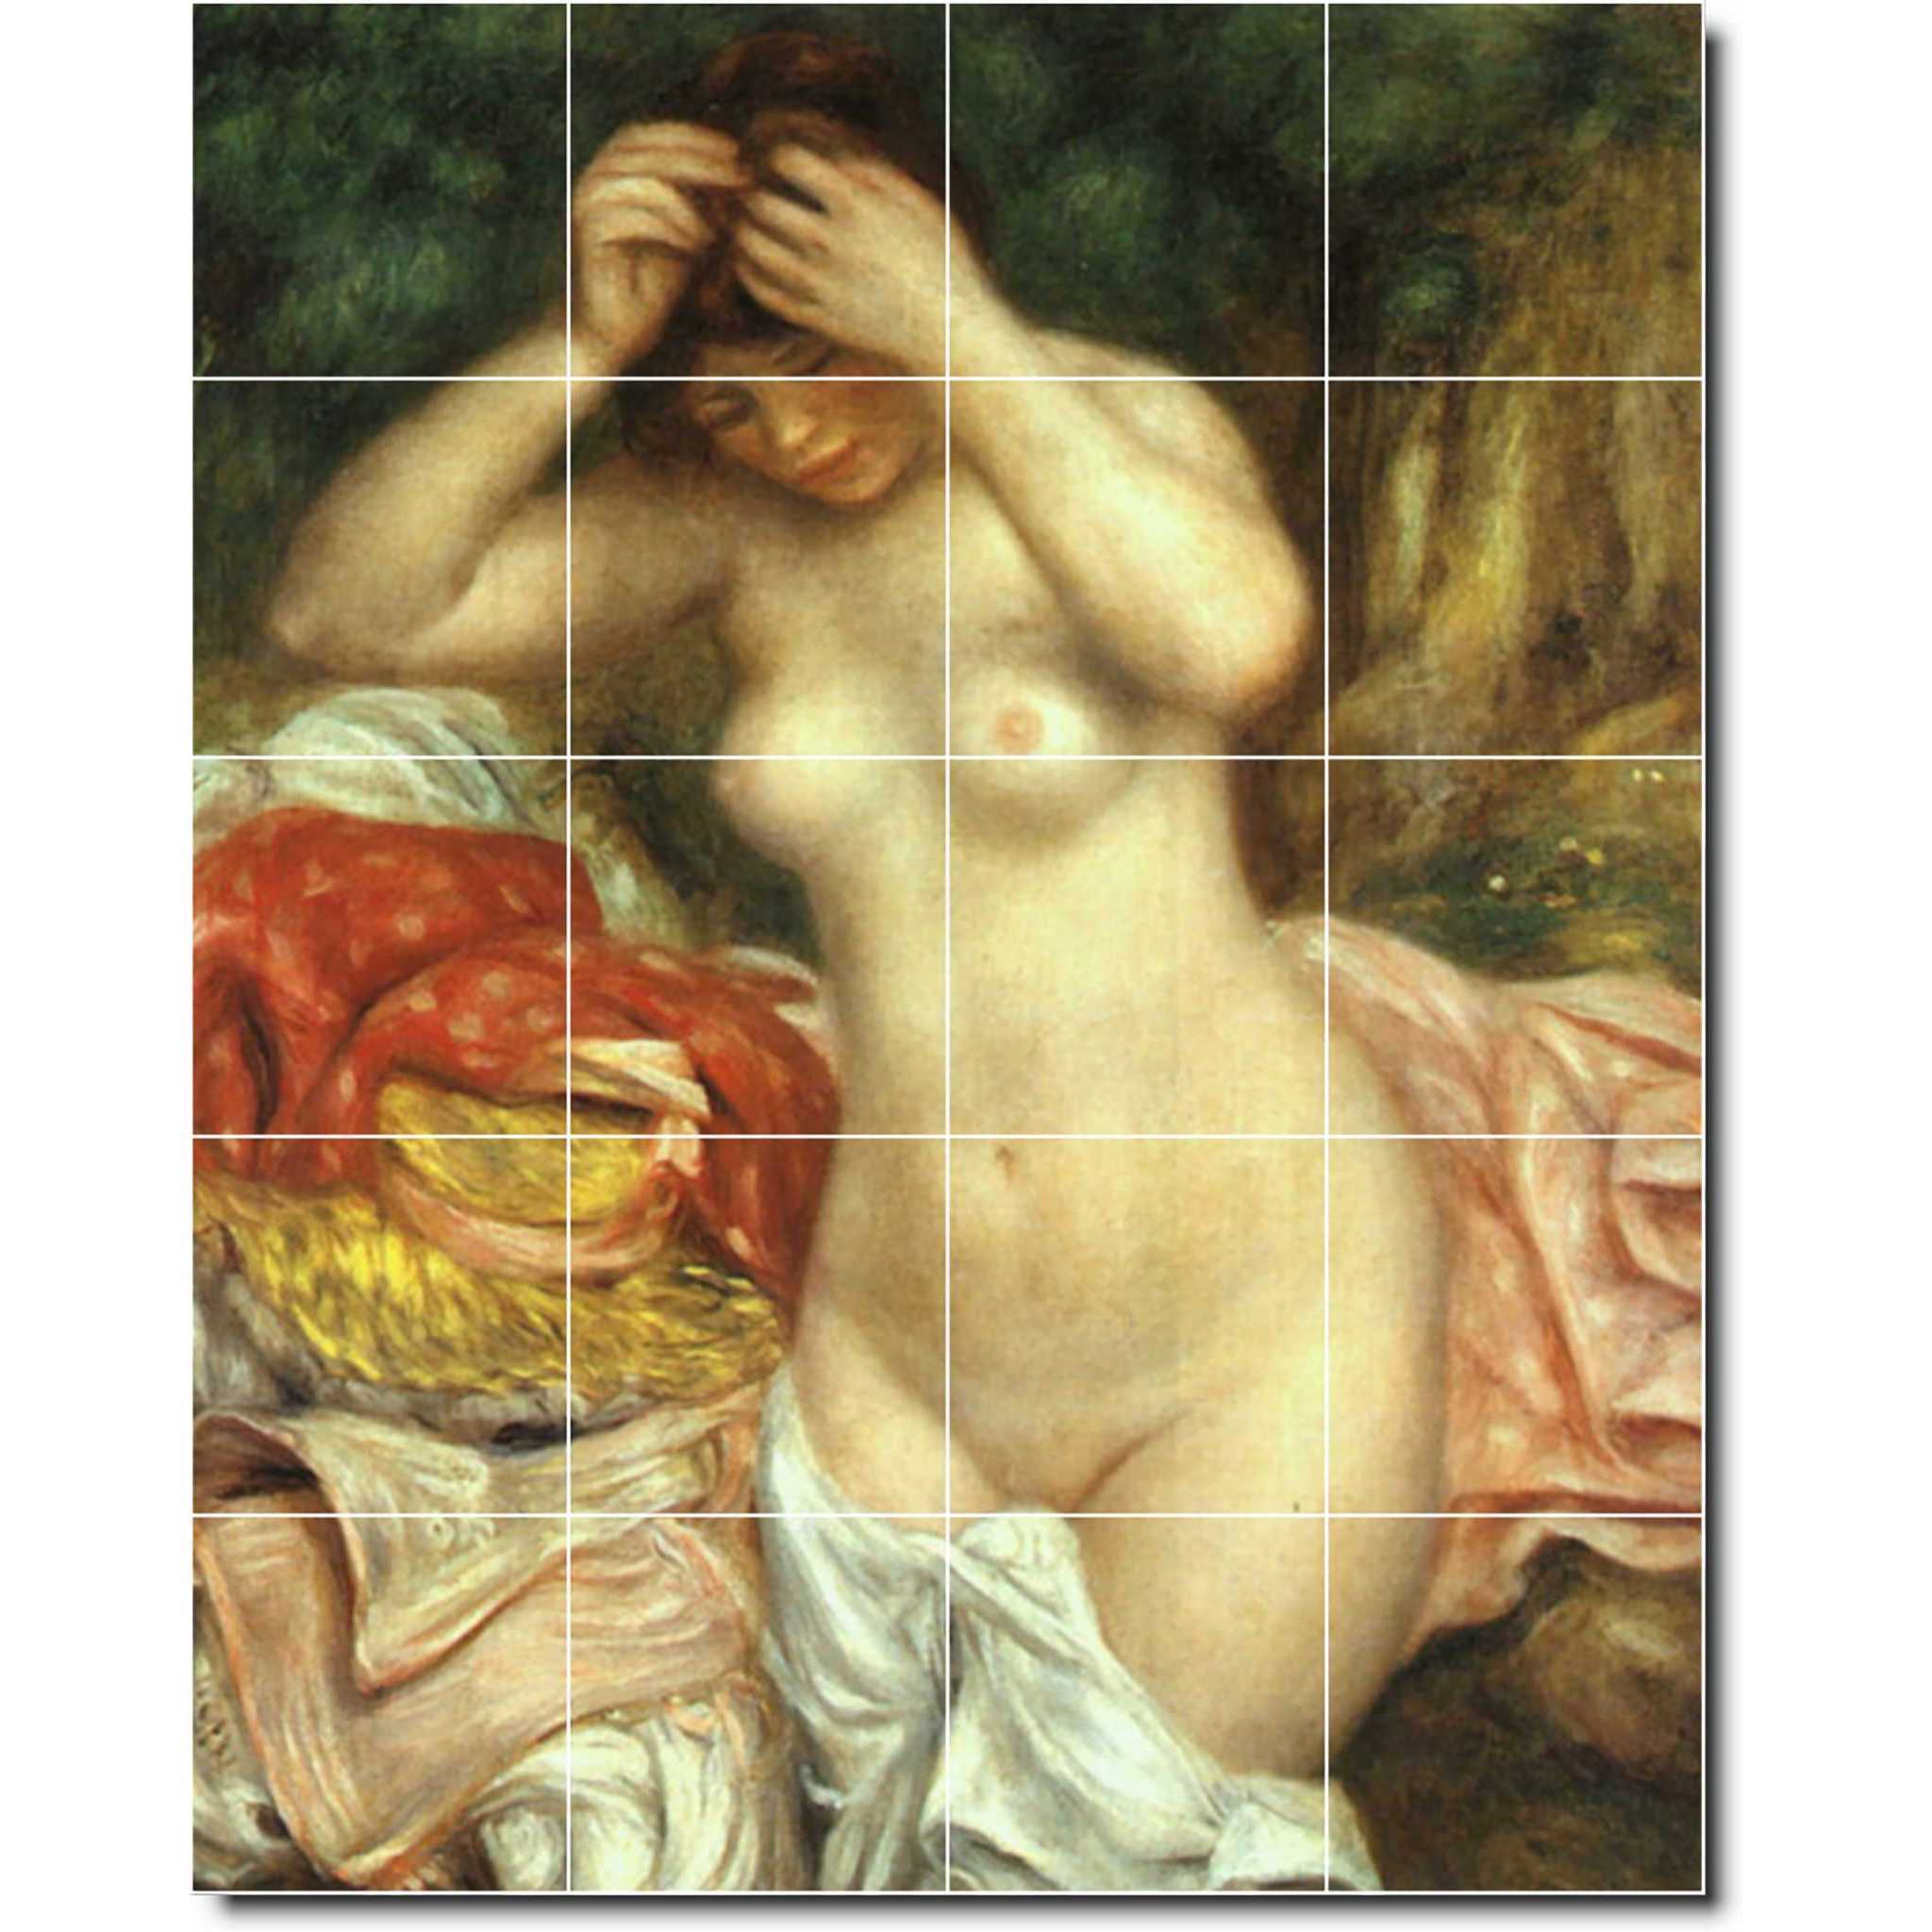 auguste renoir nude painting ceramic tile mural p07366